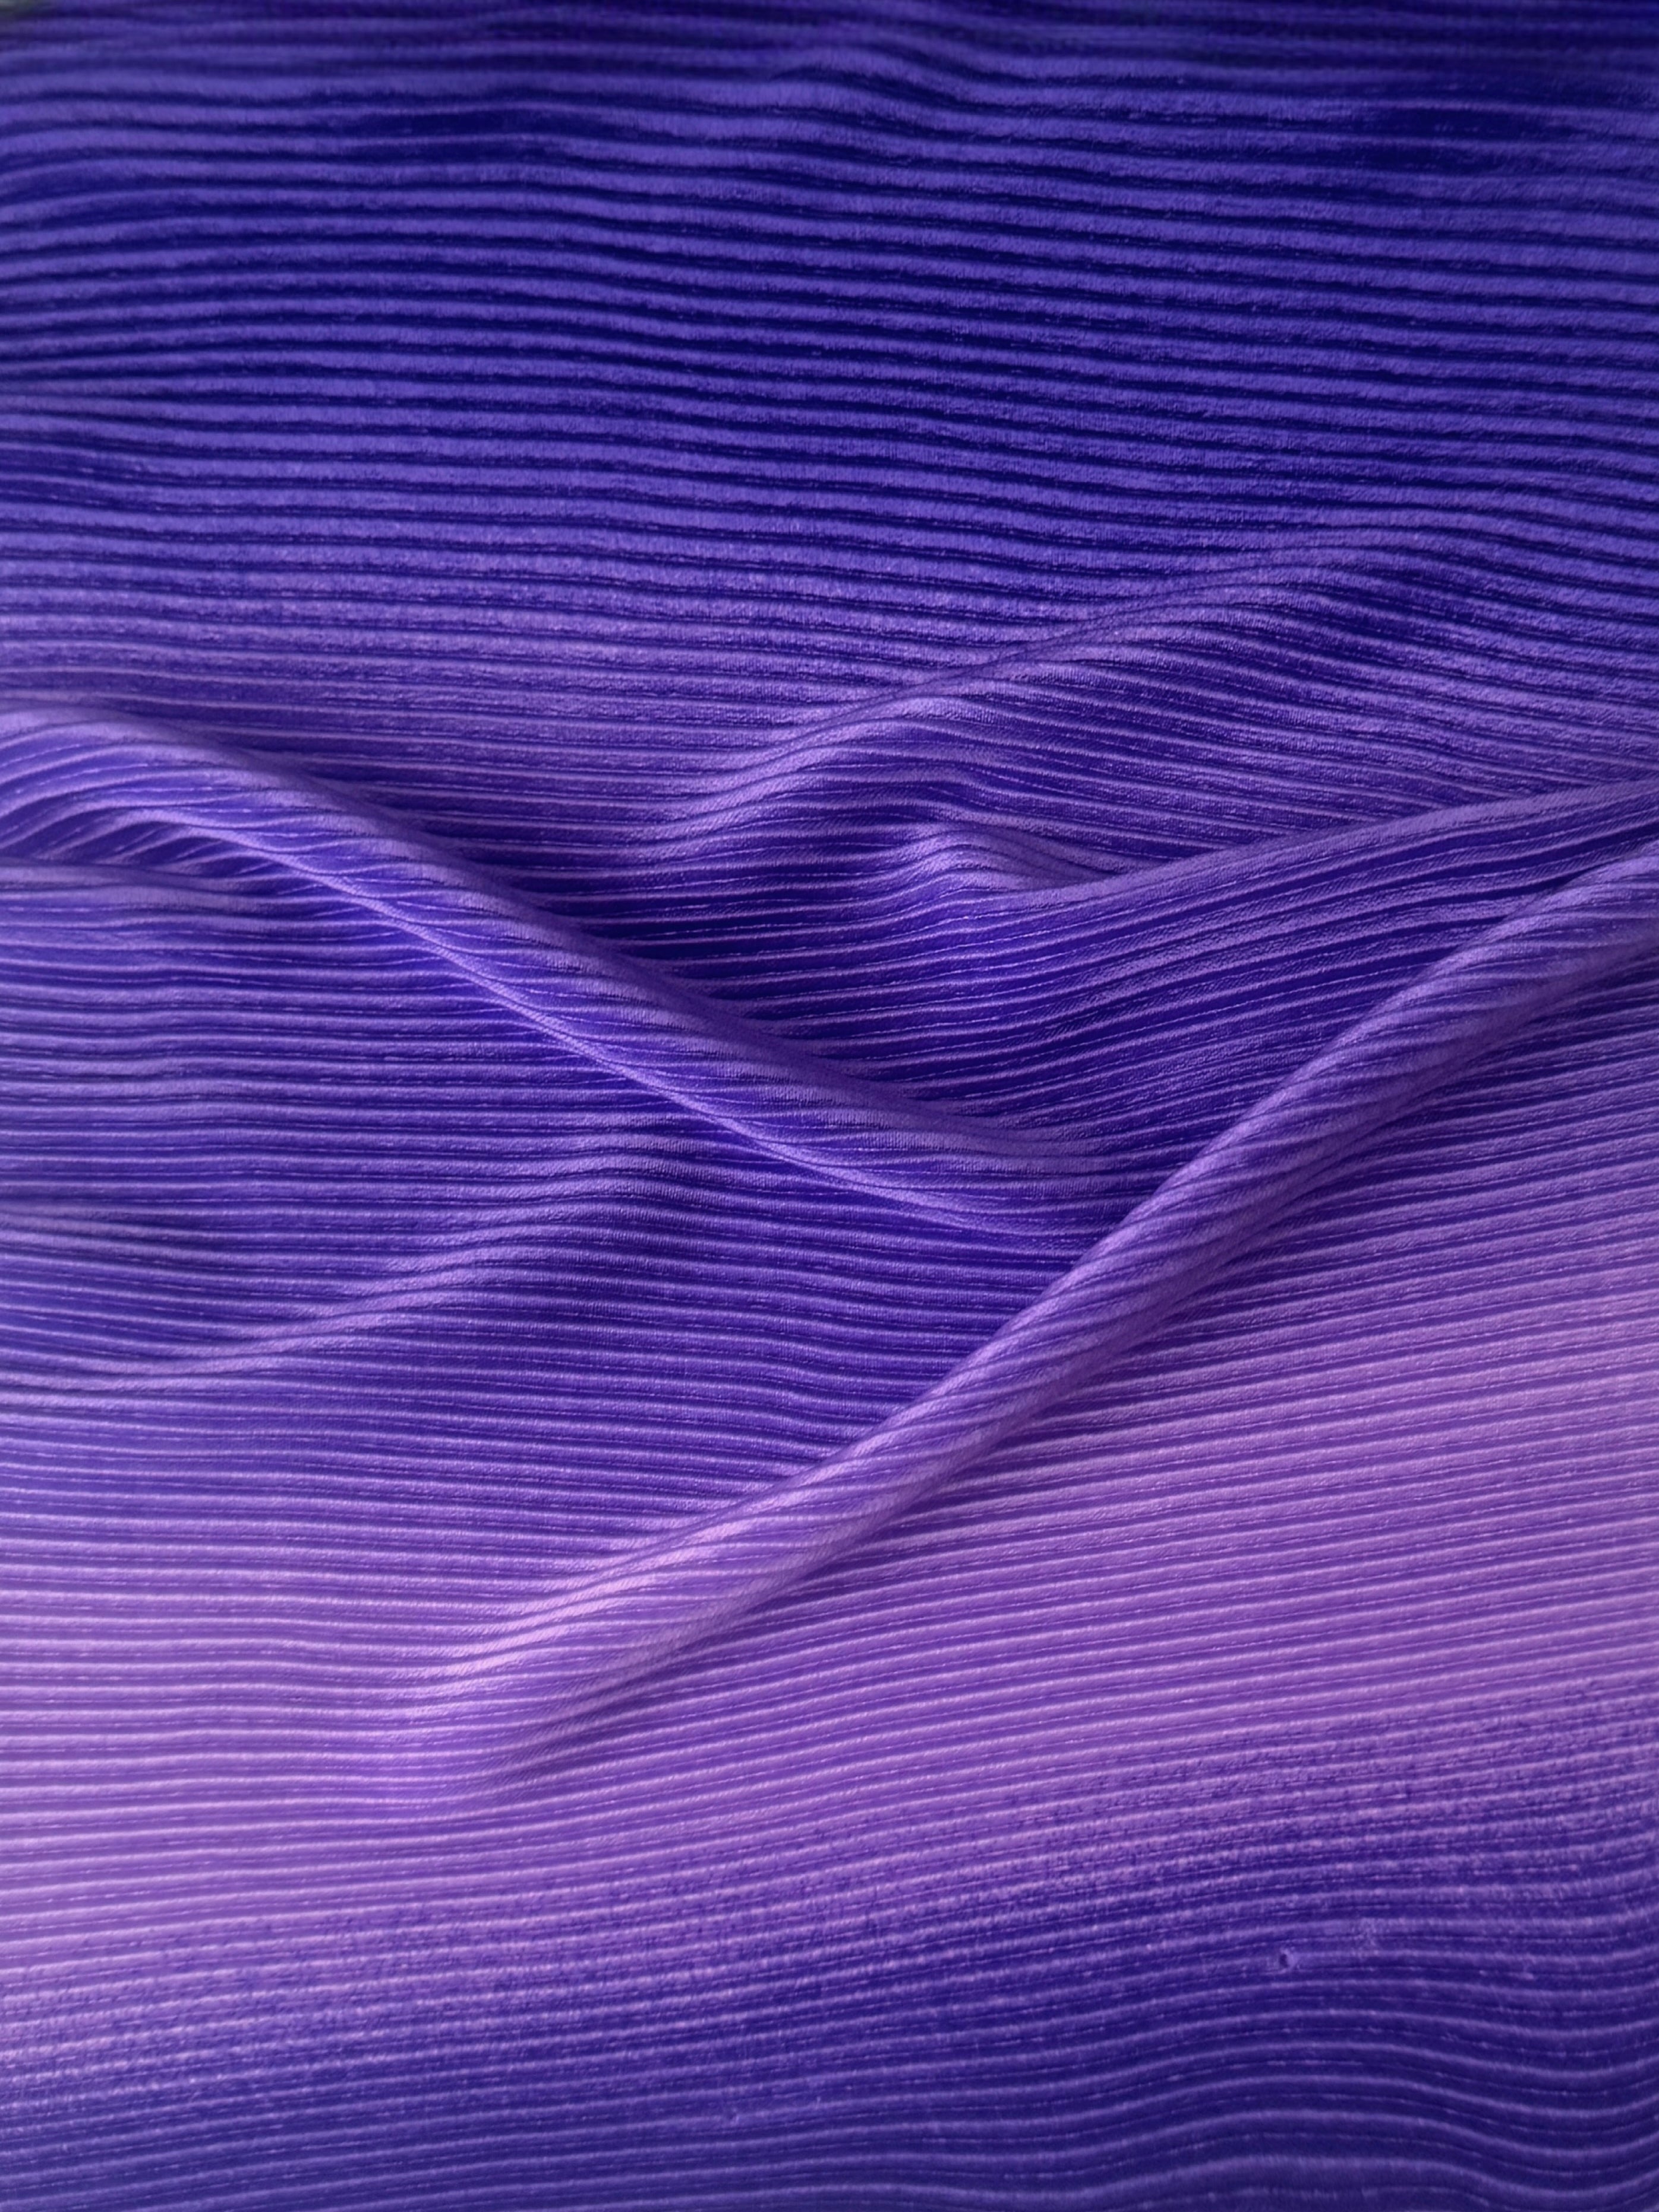 Purple Ombre Pleated Knit, purple pleated knit, purple pleated fabric, pleated spandex, spandex fabric, kiki textiles, sewing, purple textured knit